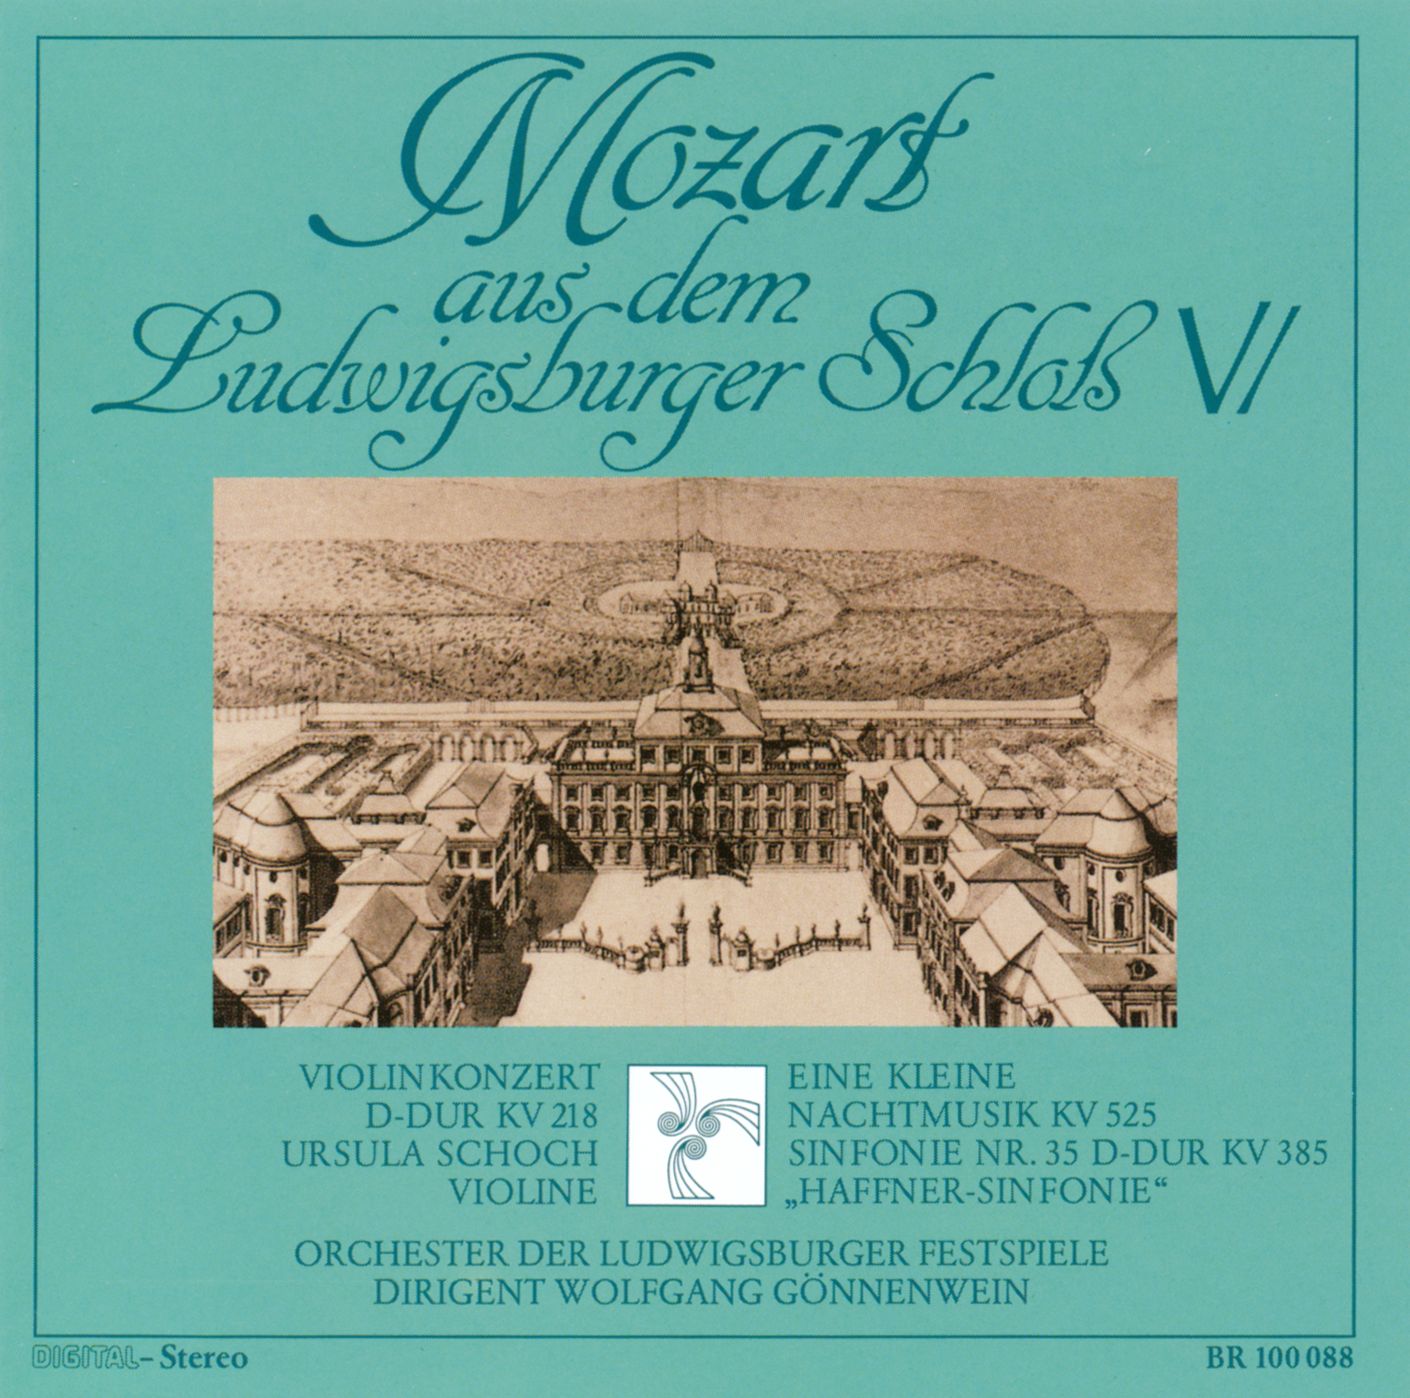 Mozart aus dem Ludwigsburger Schloß VI